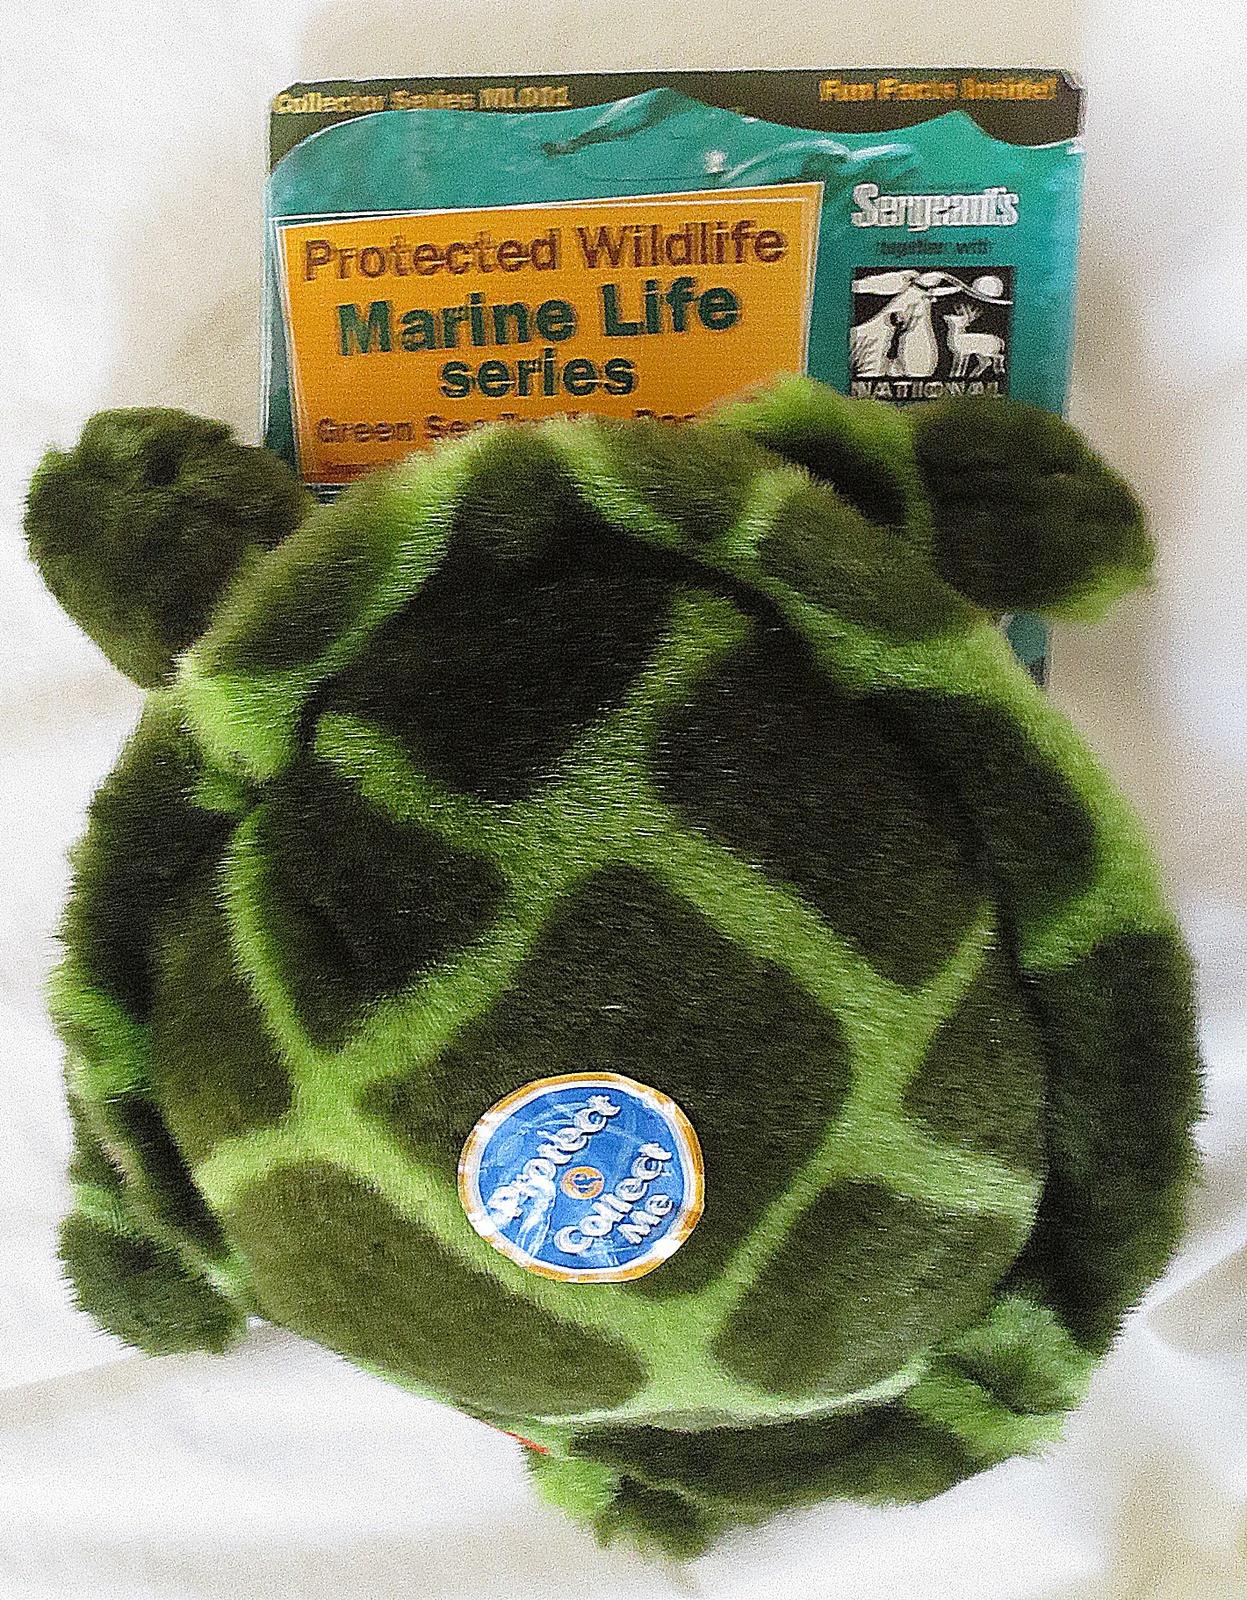 Sergeants/National Wildlife Federation Marine Life Series Green Sea Turtle 10-in - $19.95